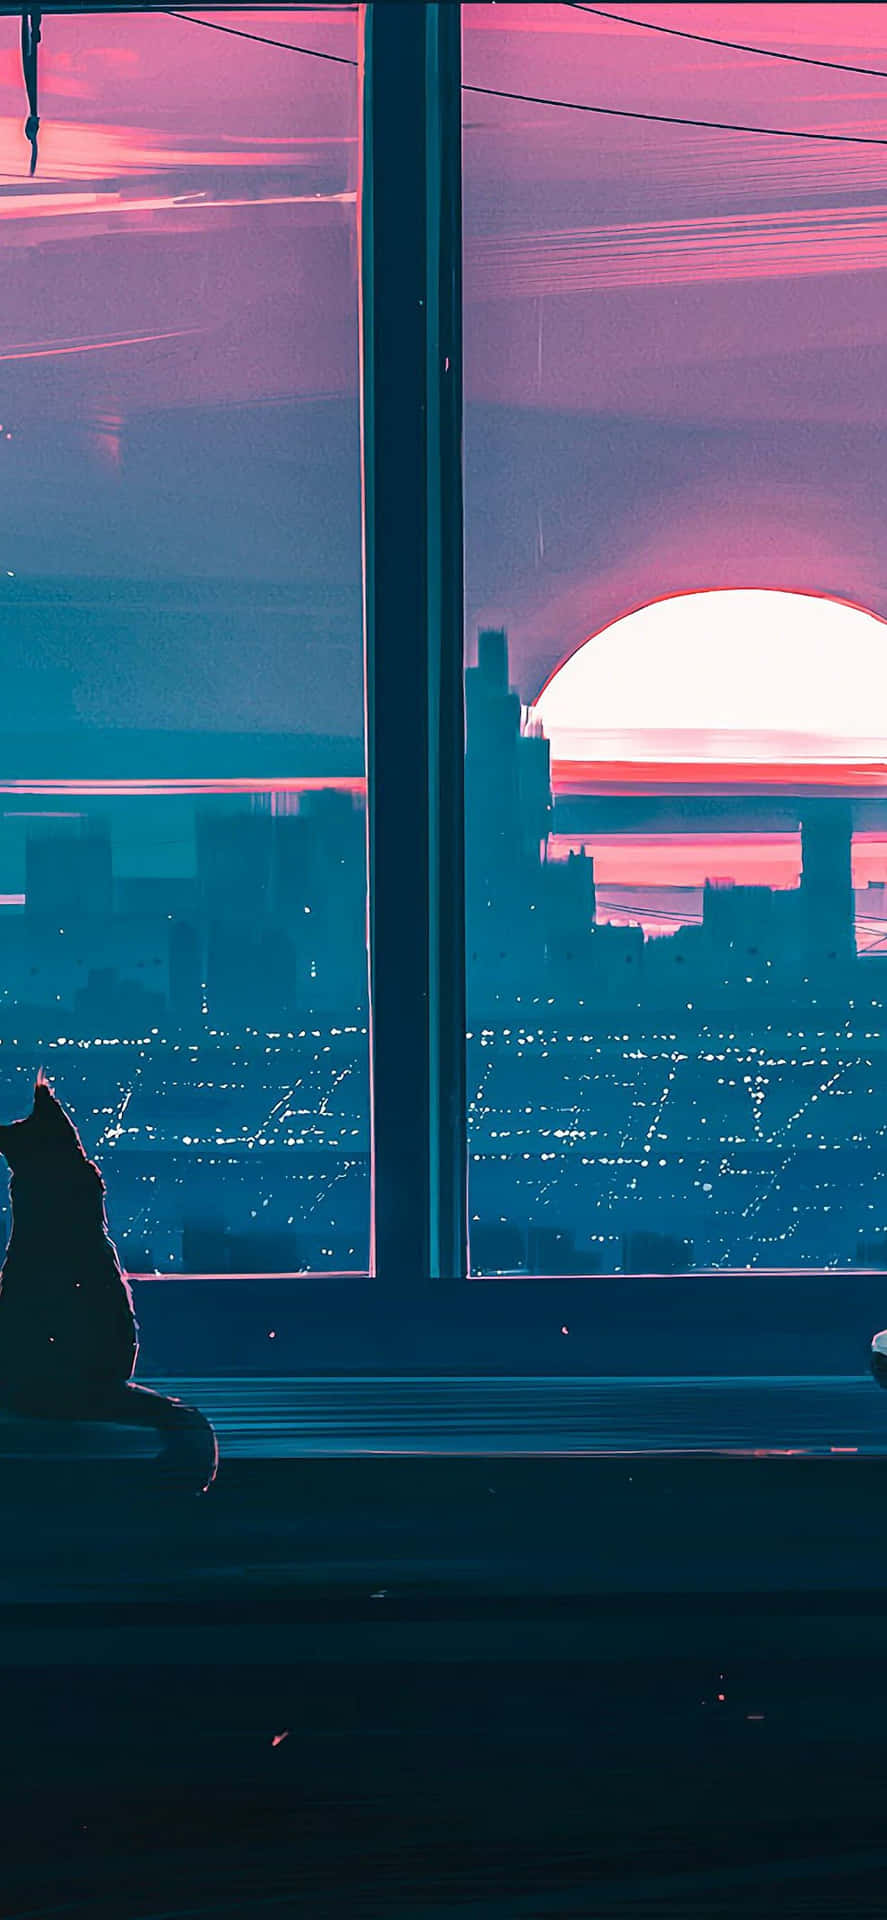 A Cat Sitting On A Window Sill